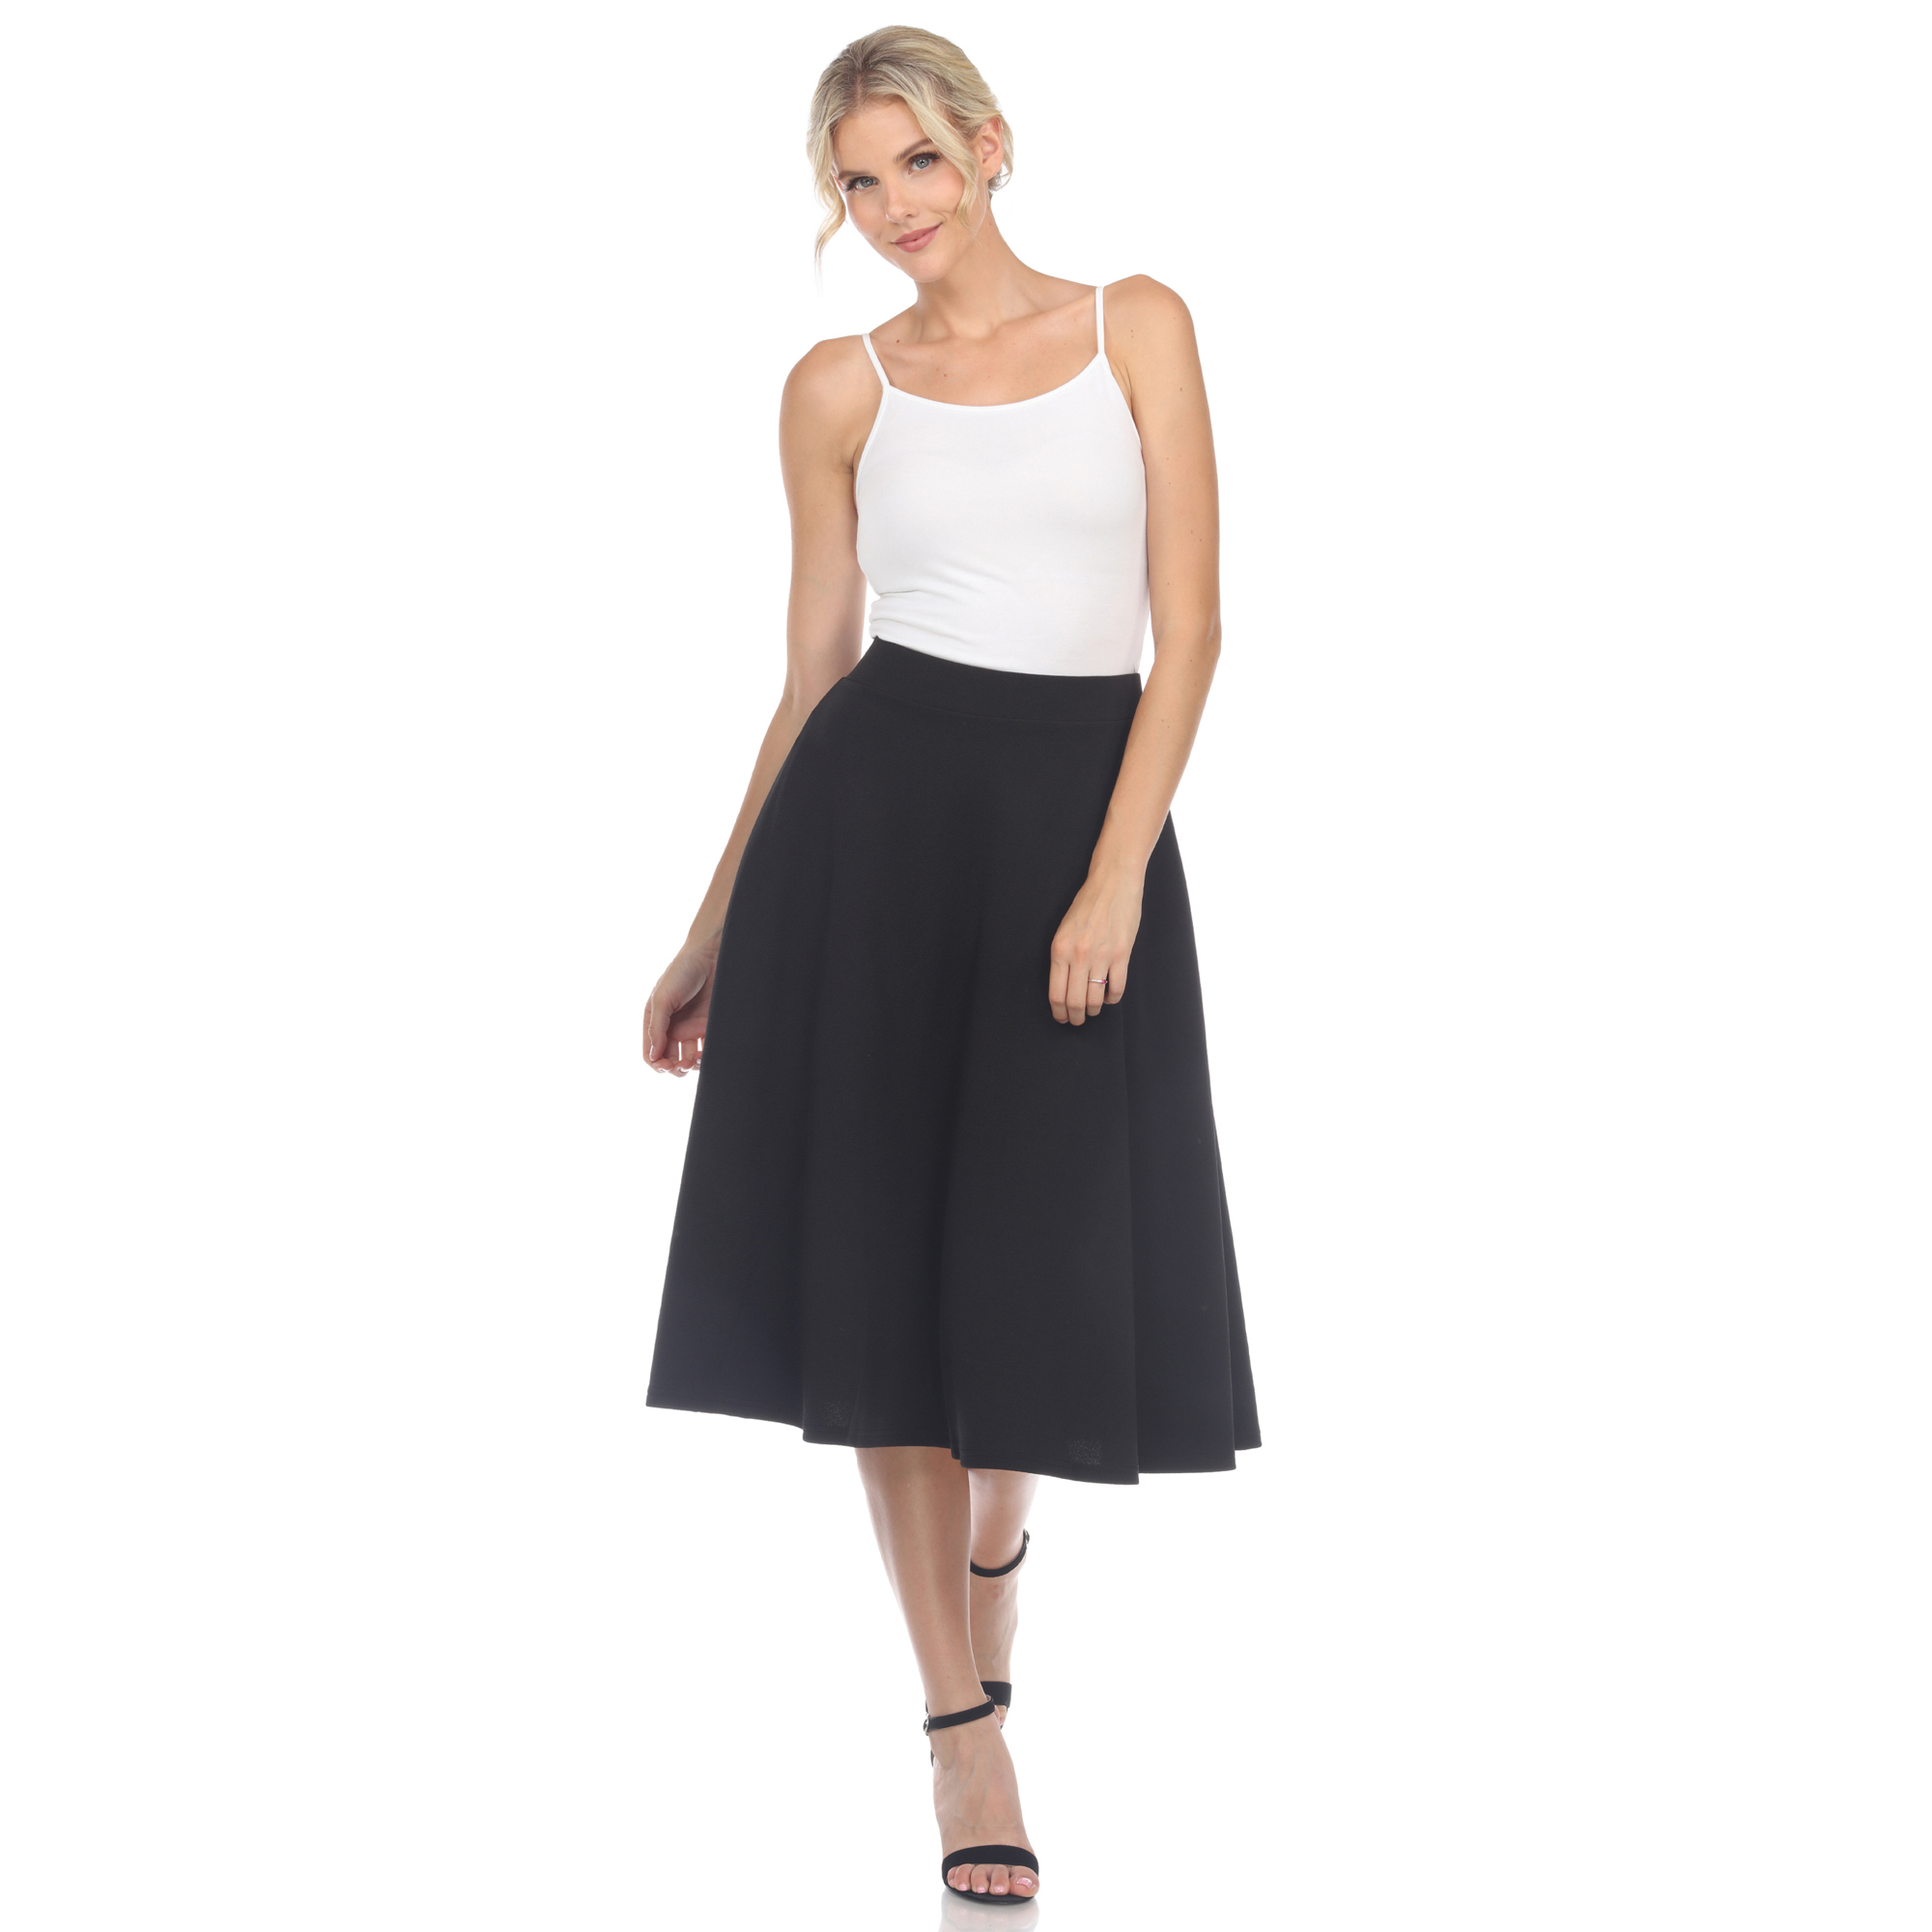 White Mark Womenâs Flared Midi Skirt With Pockets - Olive, 3X